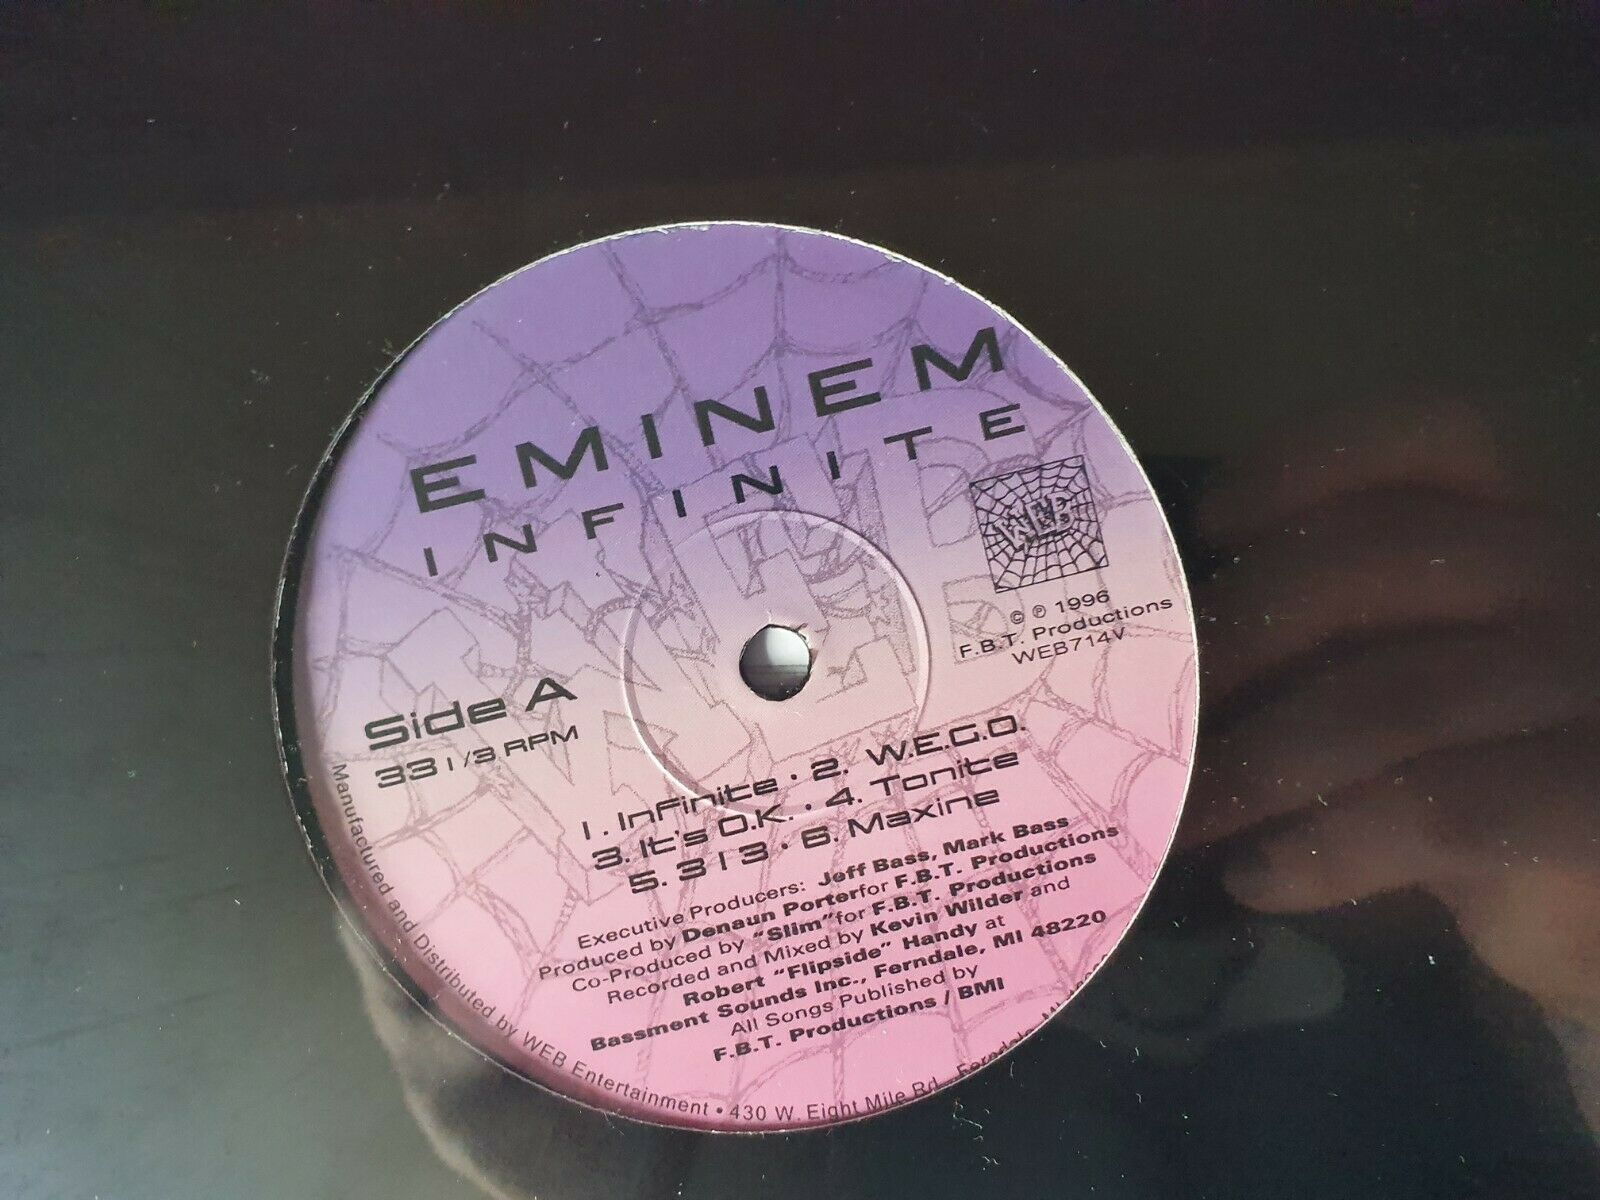 Vinilo Eminem - Infinite Original: Compra Online en Oferta